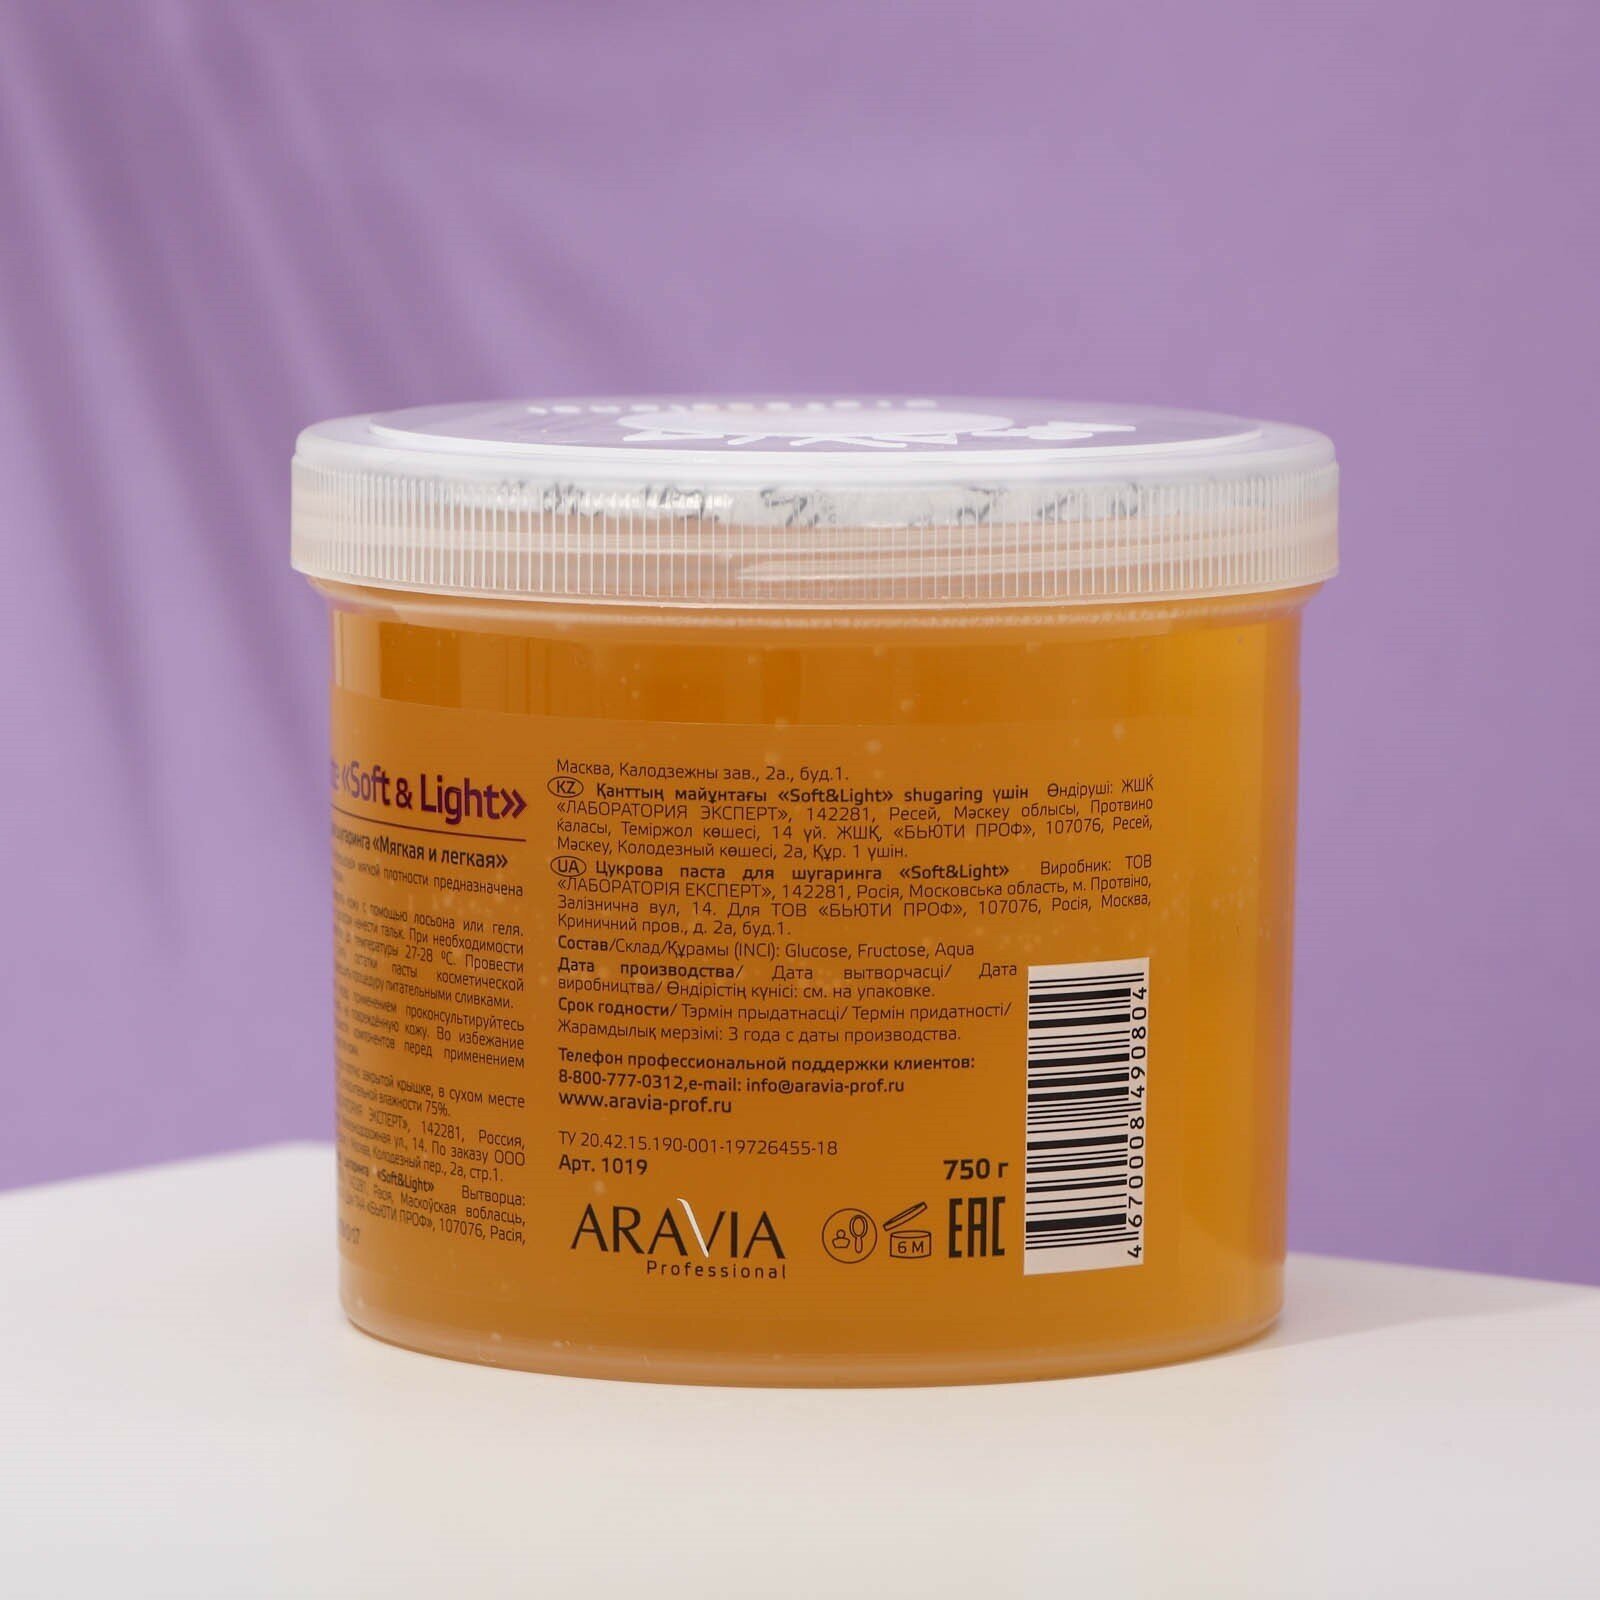 Aravia professional Сахарная паста для шугаринга Мягкая и лёгкая 1500 гр (Aravia professional, ) - фото №18